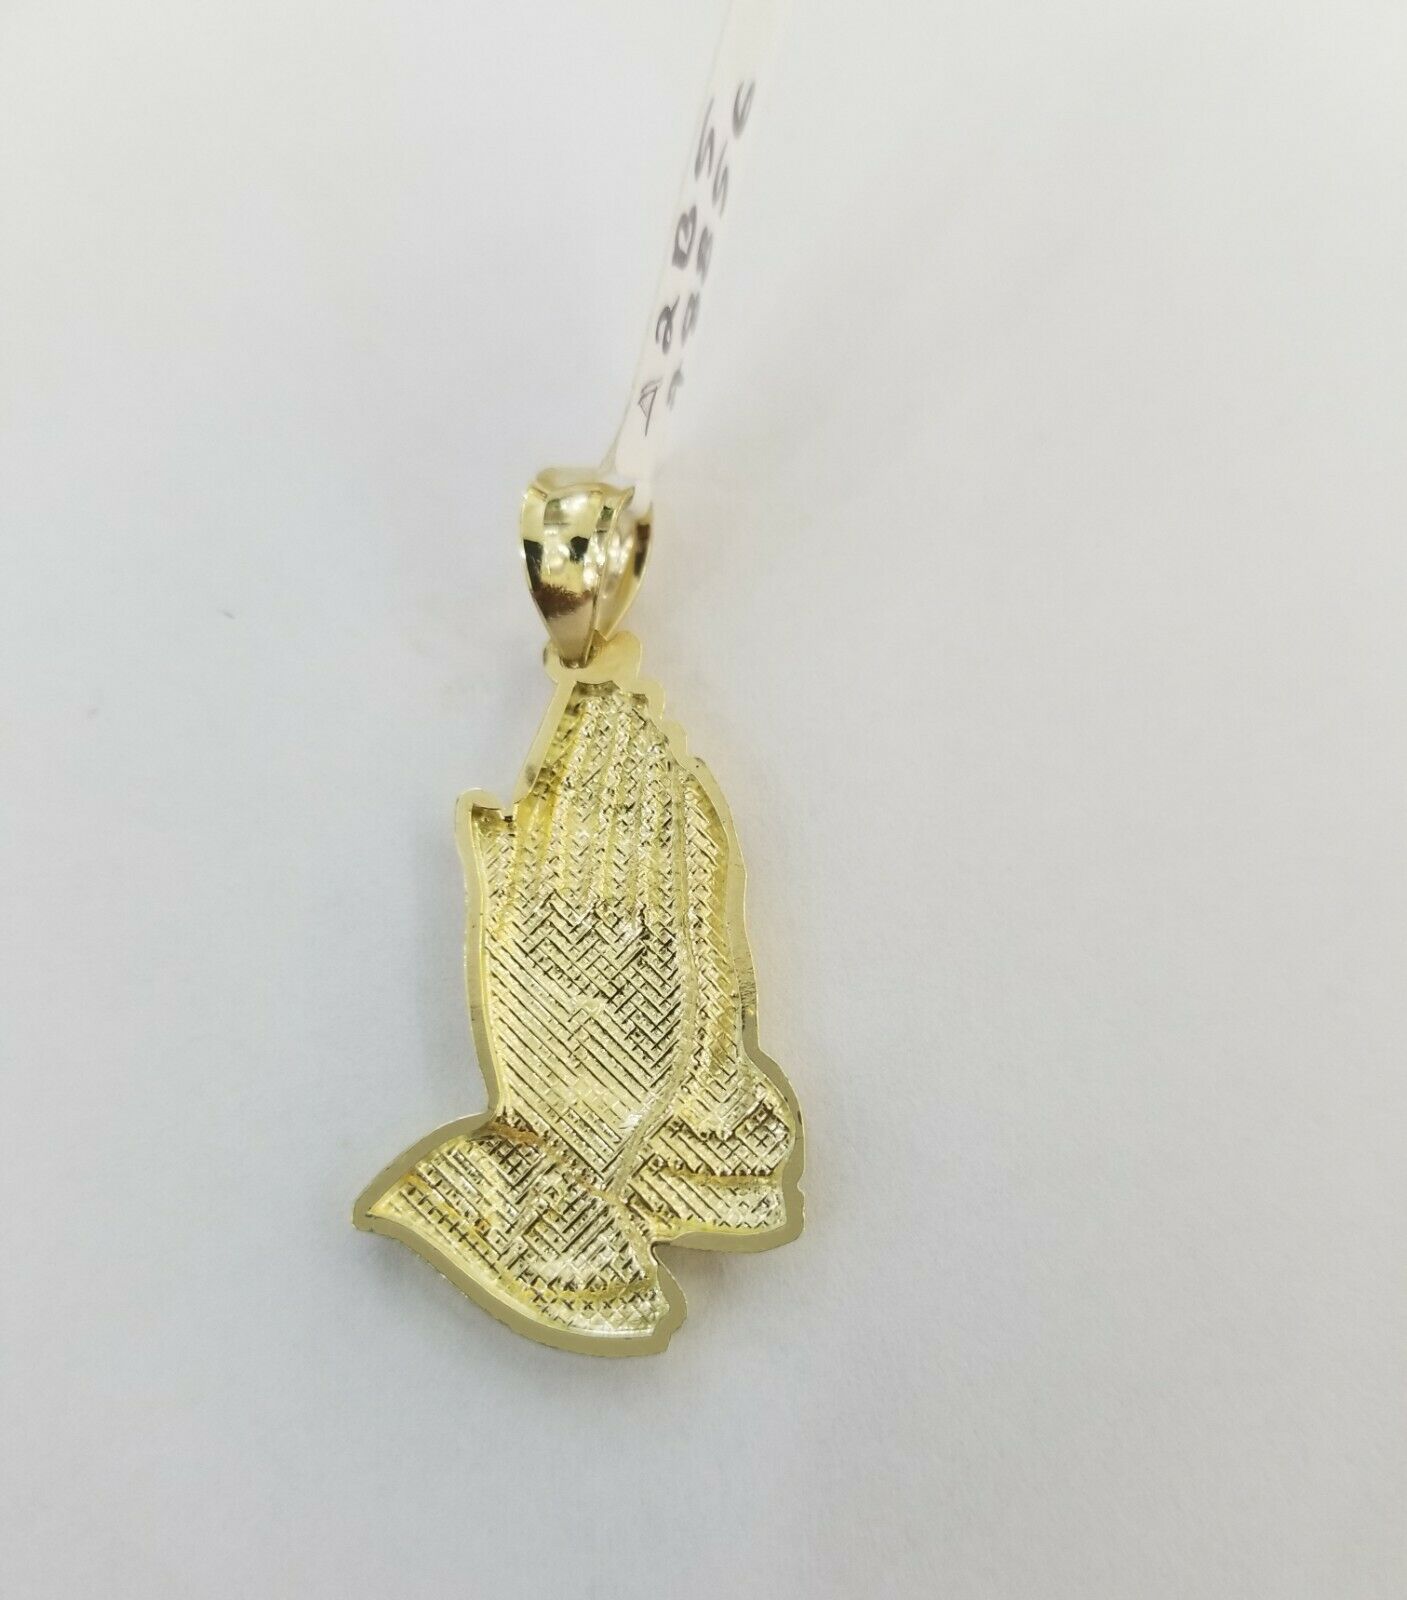 Real 10k Yellow Gold Chain & Charm Praying hand pendant , 26